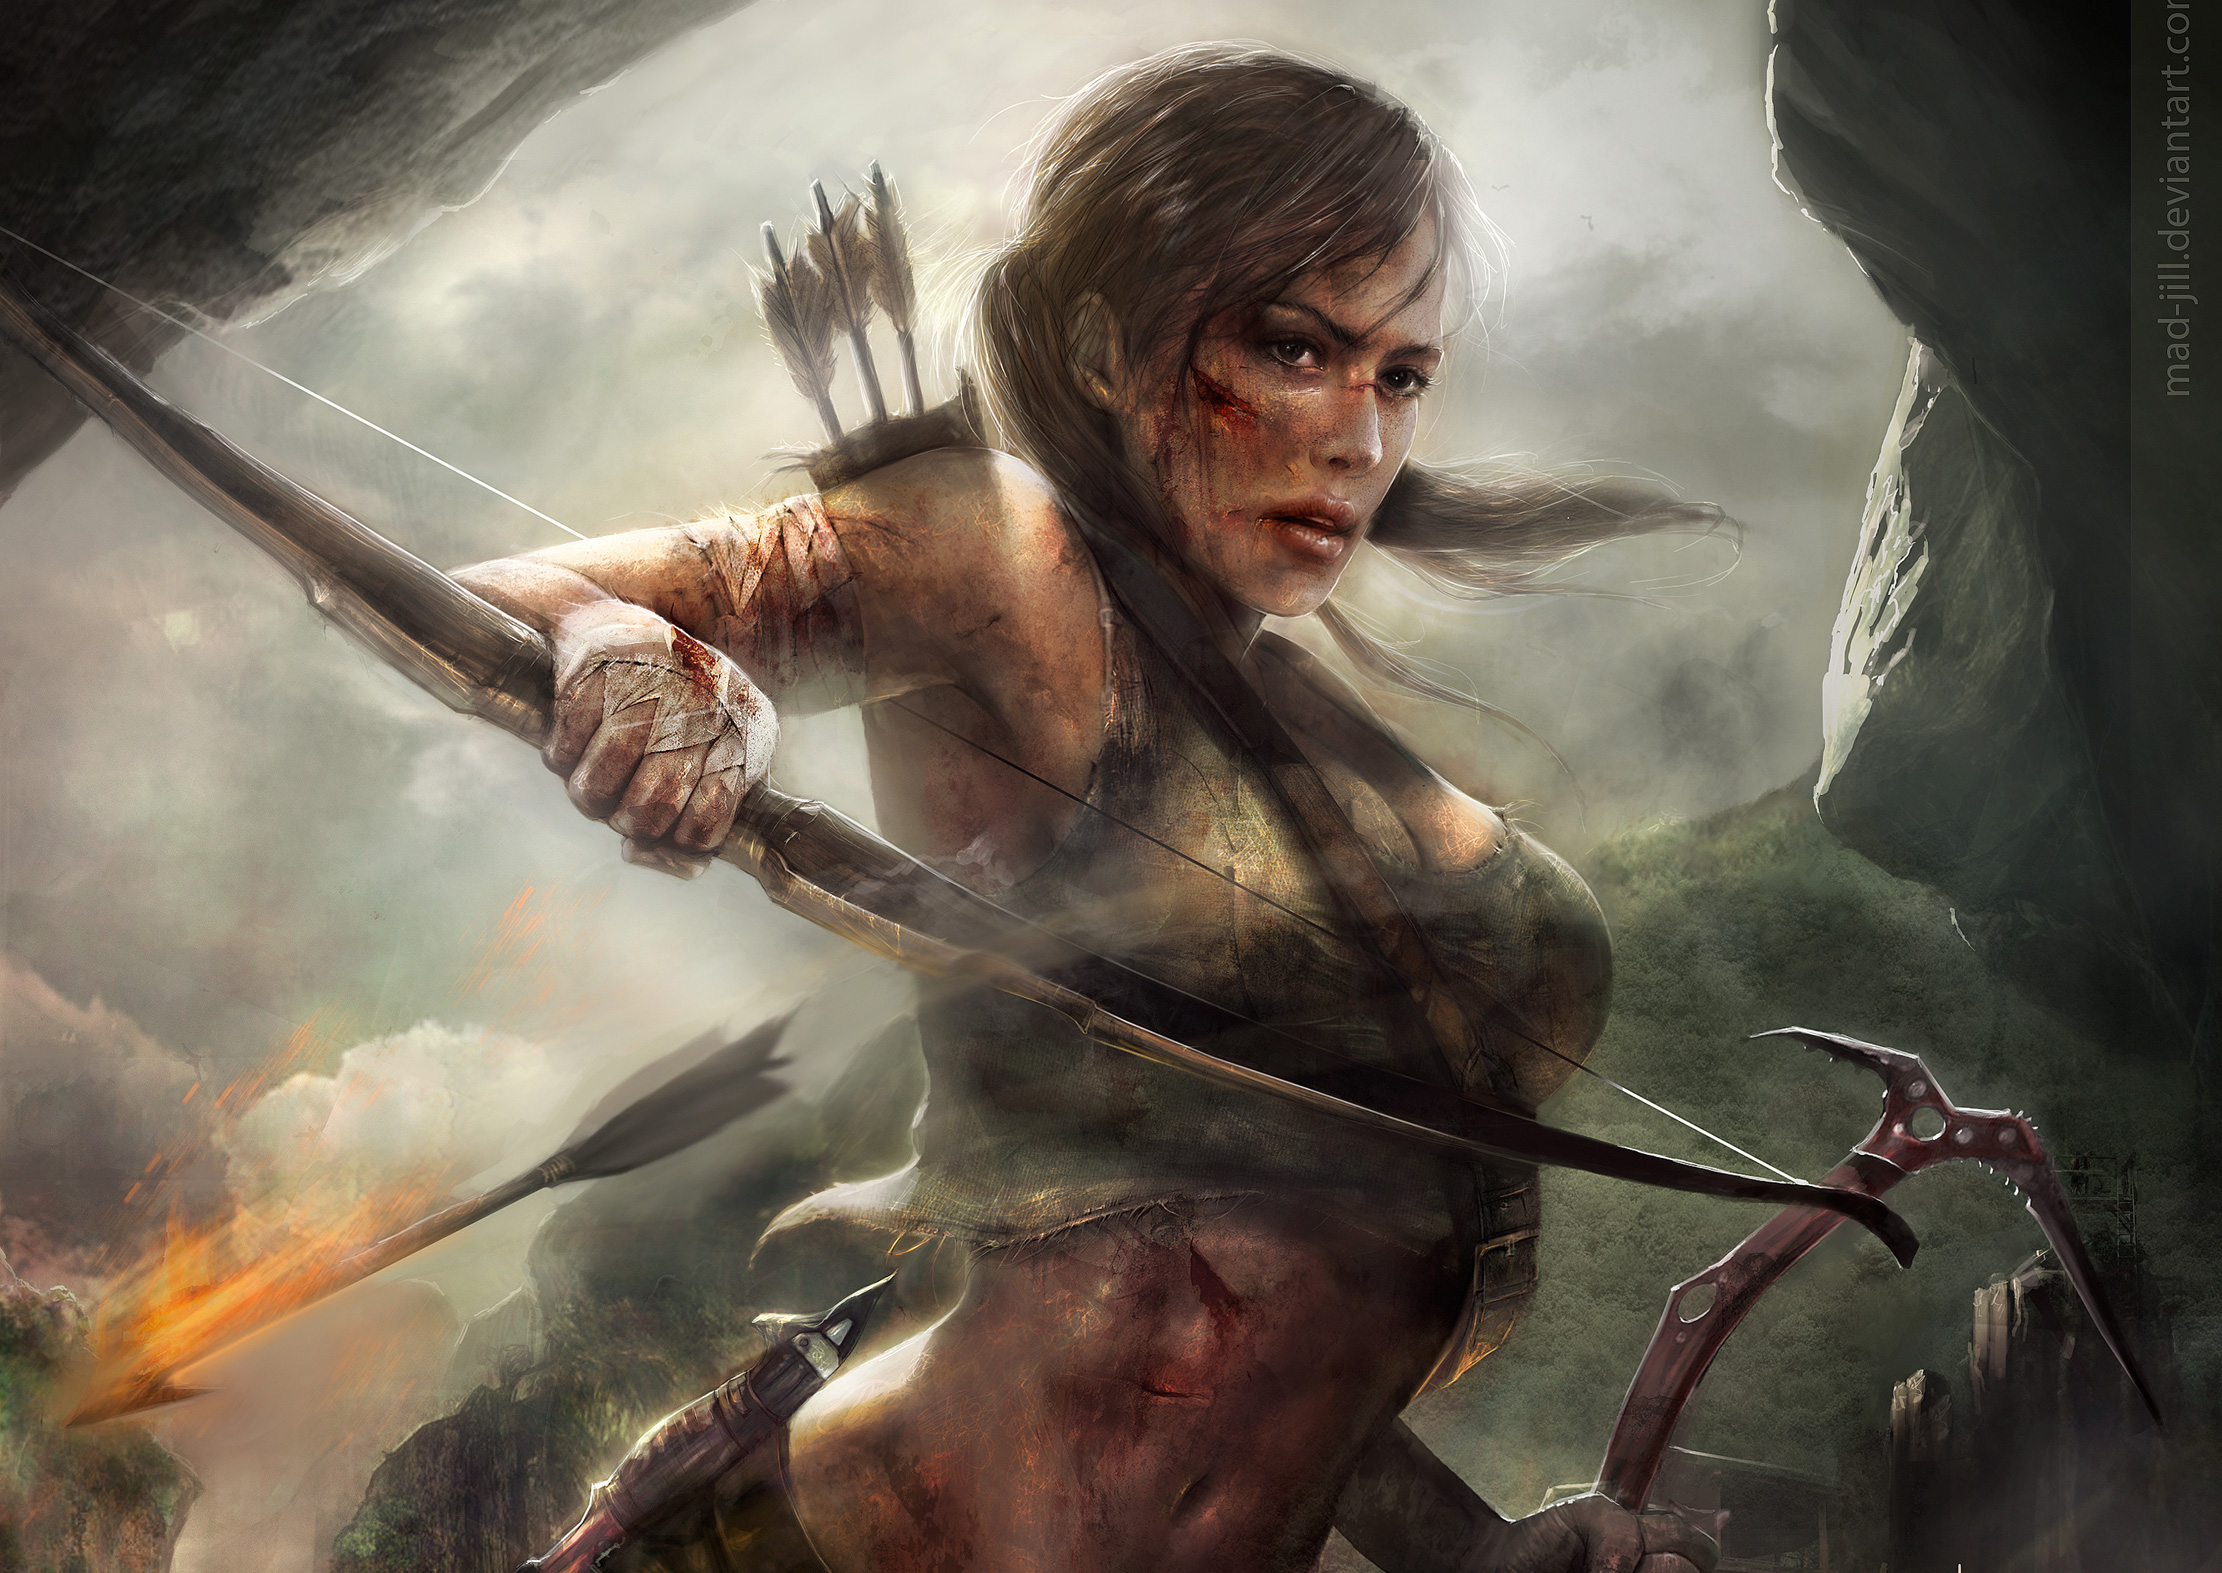 Lara Croft Tomb Raider Artwork Wallpaper Hd Fantasy 4k Wallpapers Images And Background